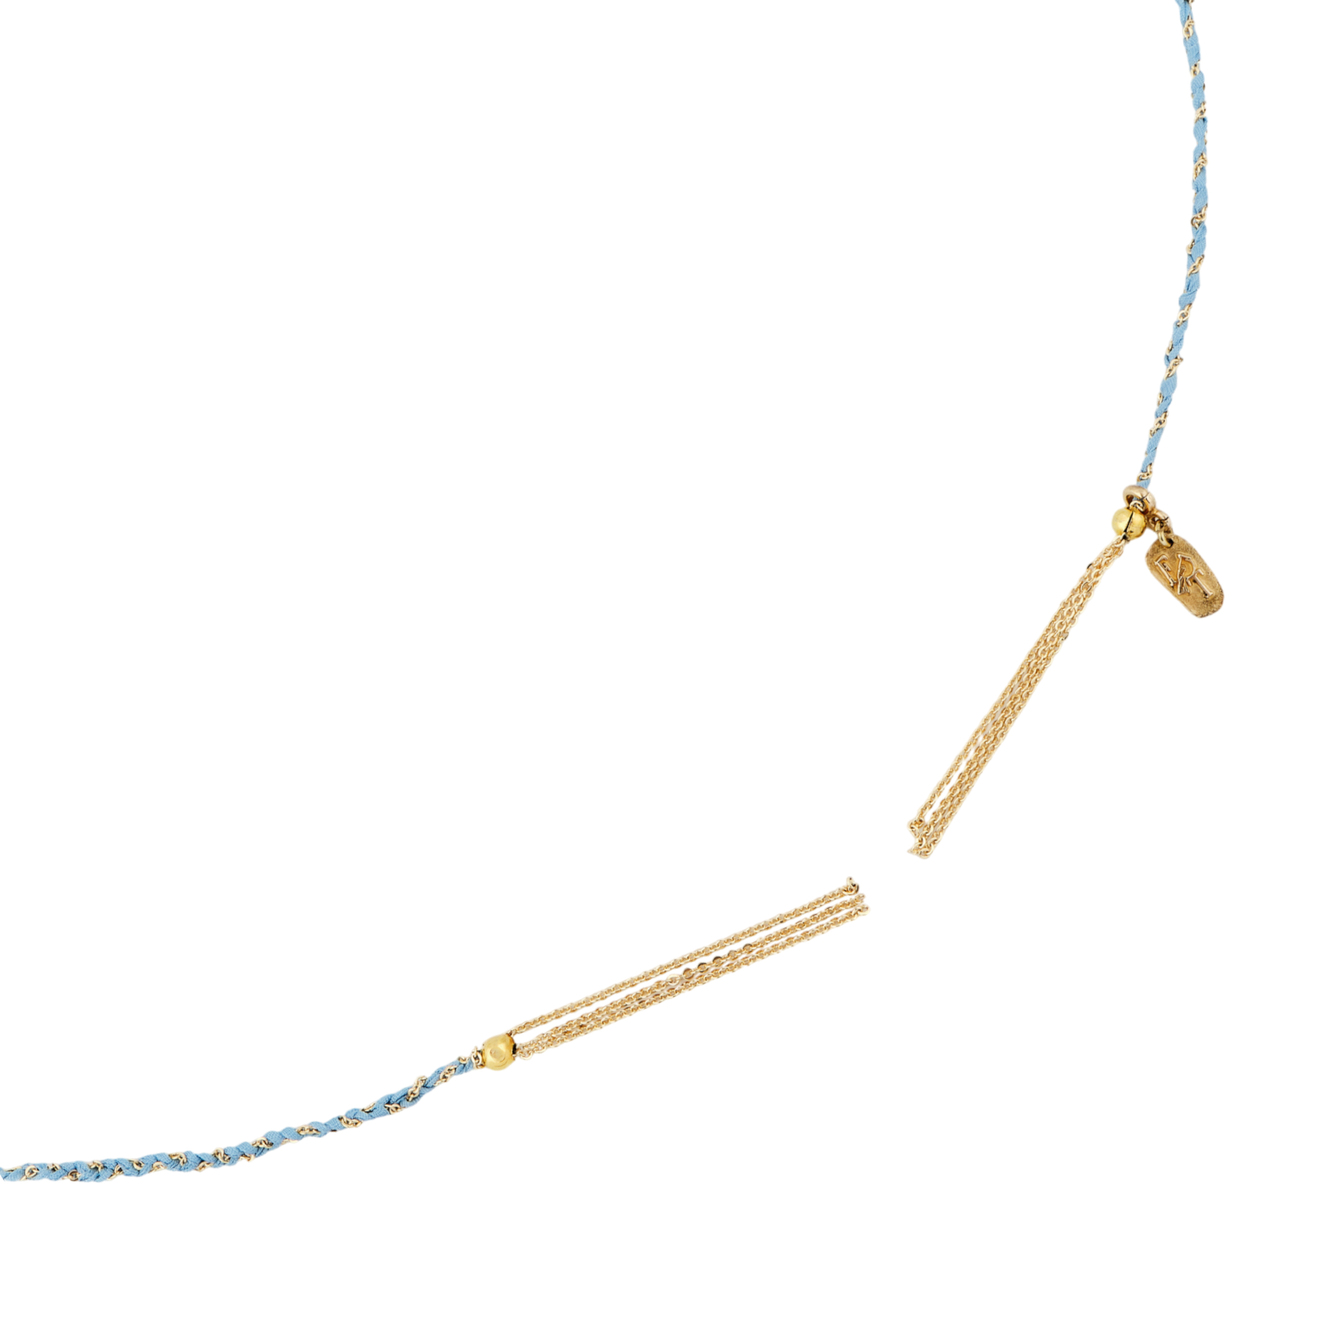 Fairy Table Бронзовая карамелька «Дюшес» на небесно-голубом шнурке из шелковой ленты с цепочкой